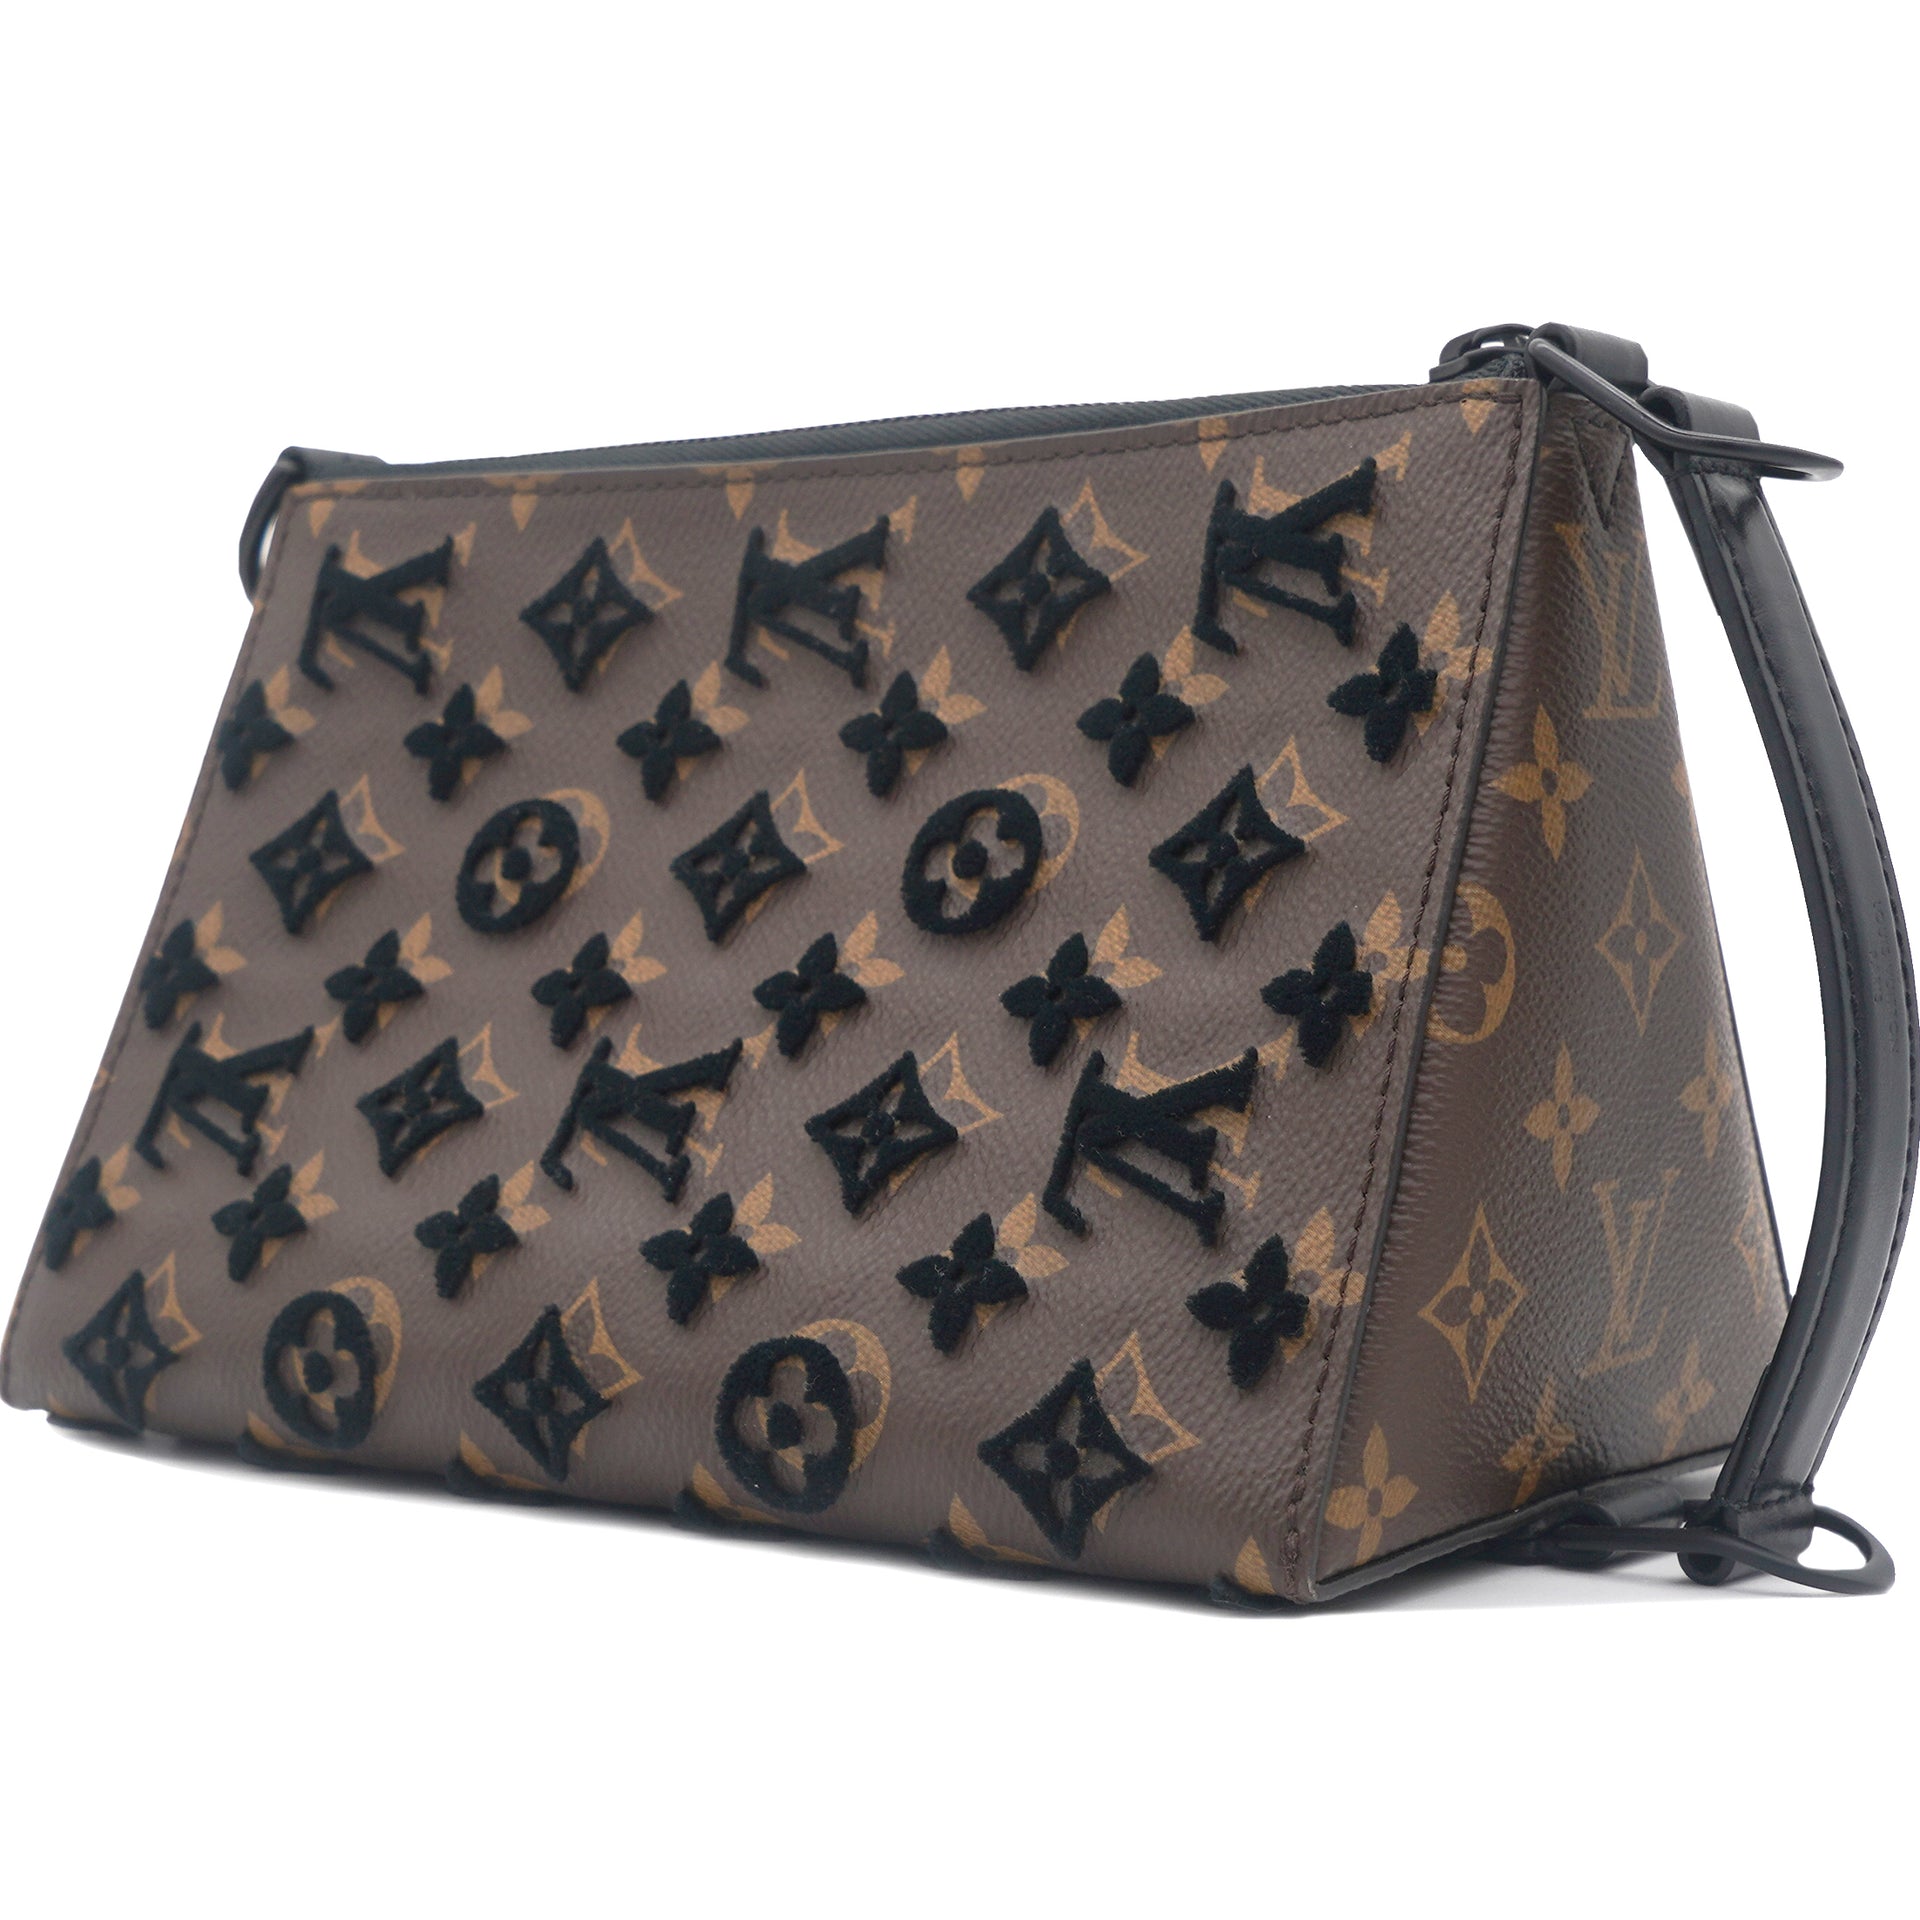 Shop authentic Louis Vuitton Monogram Tuffetage Triangle Messenger at  revogue for just USD 2,700.00